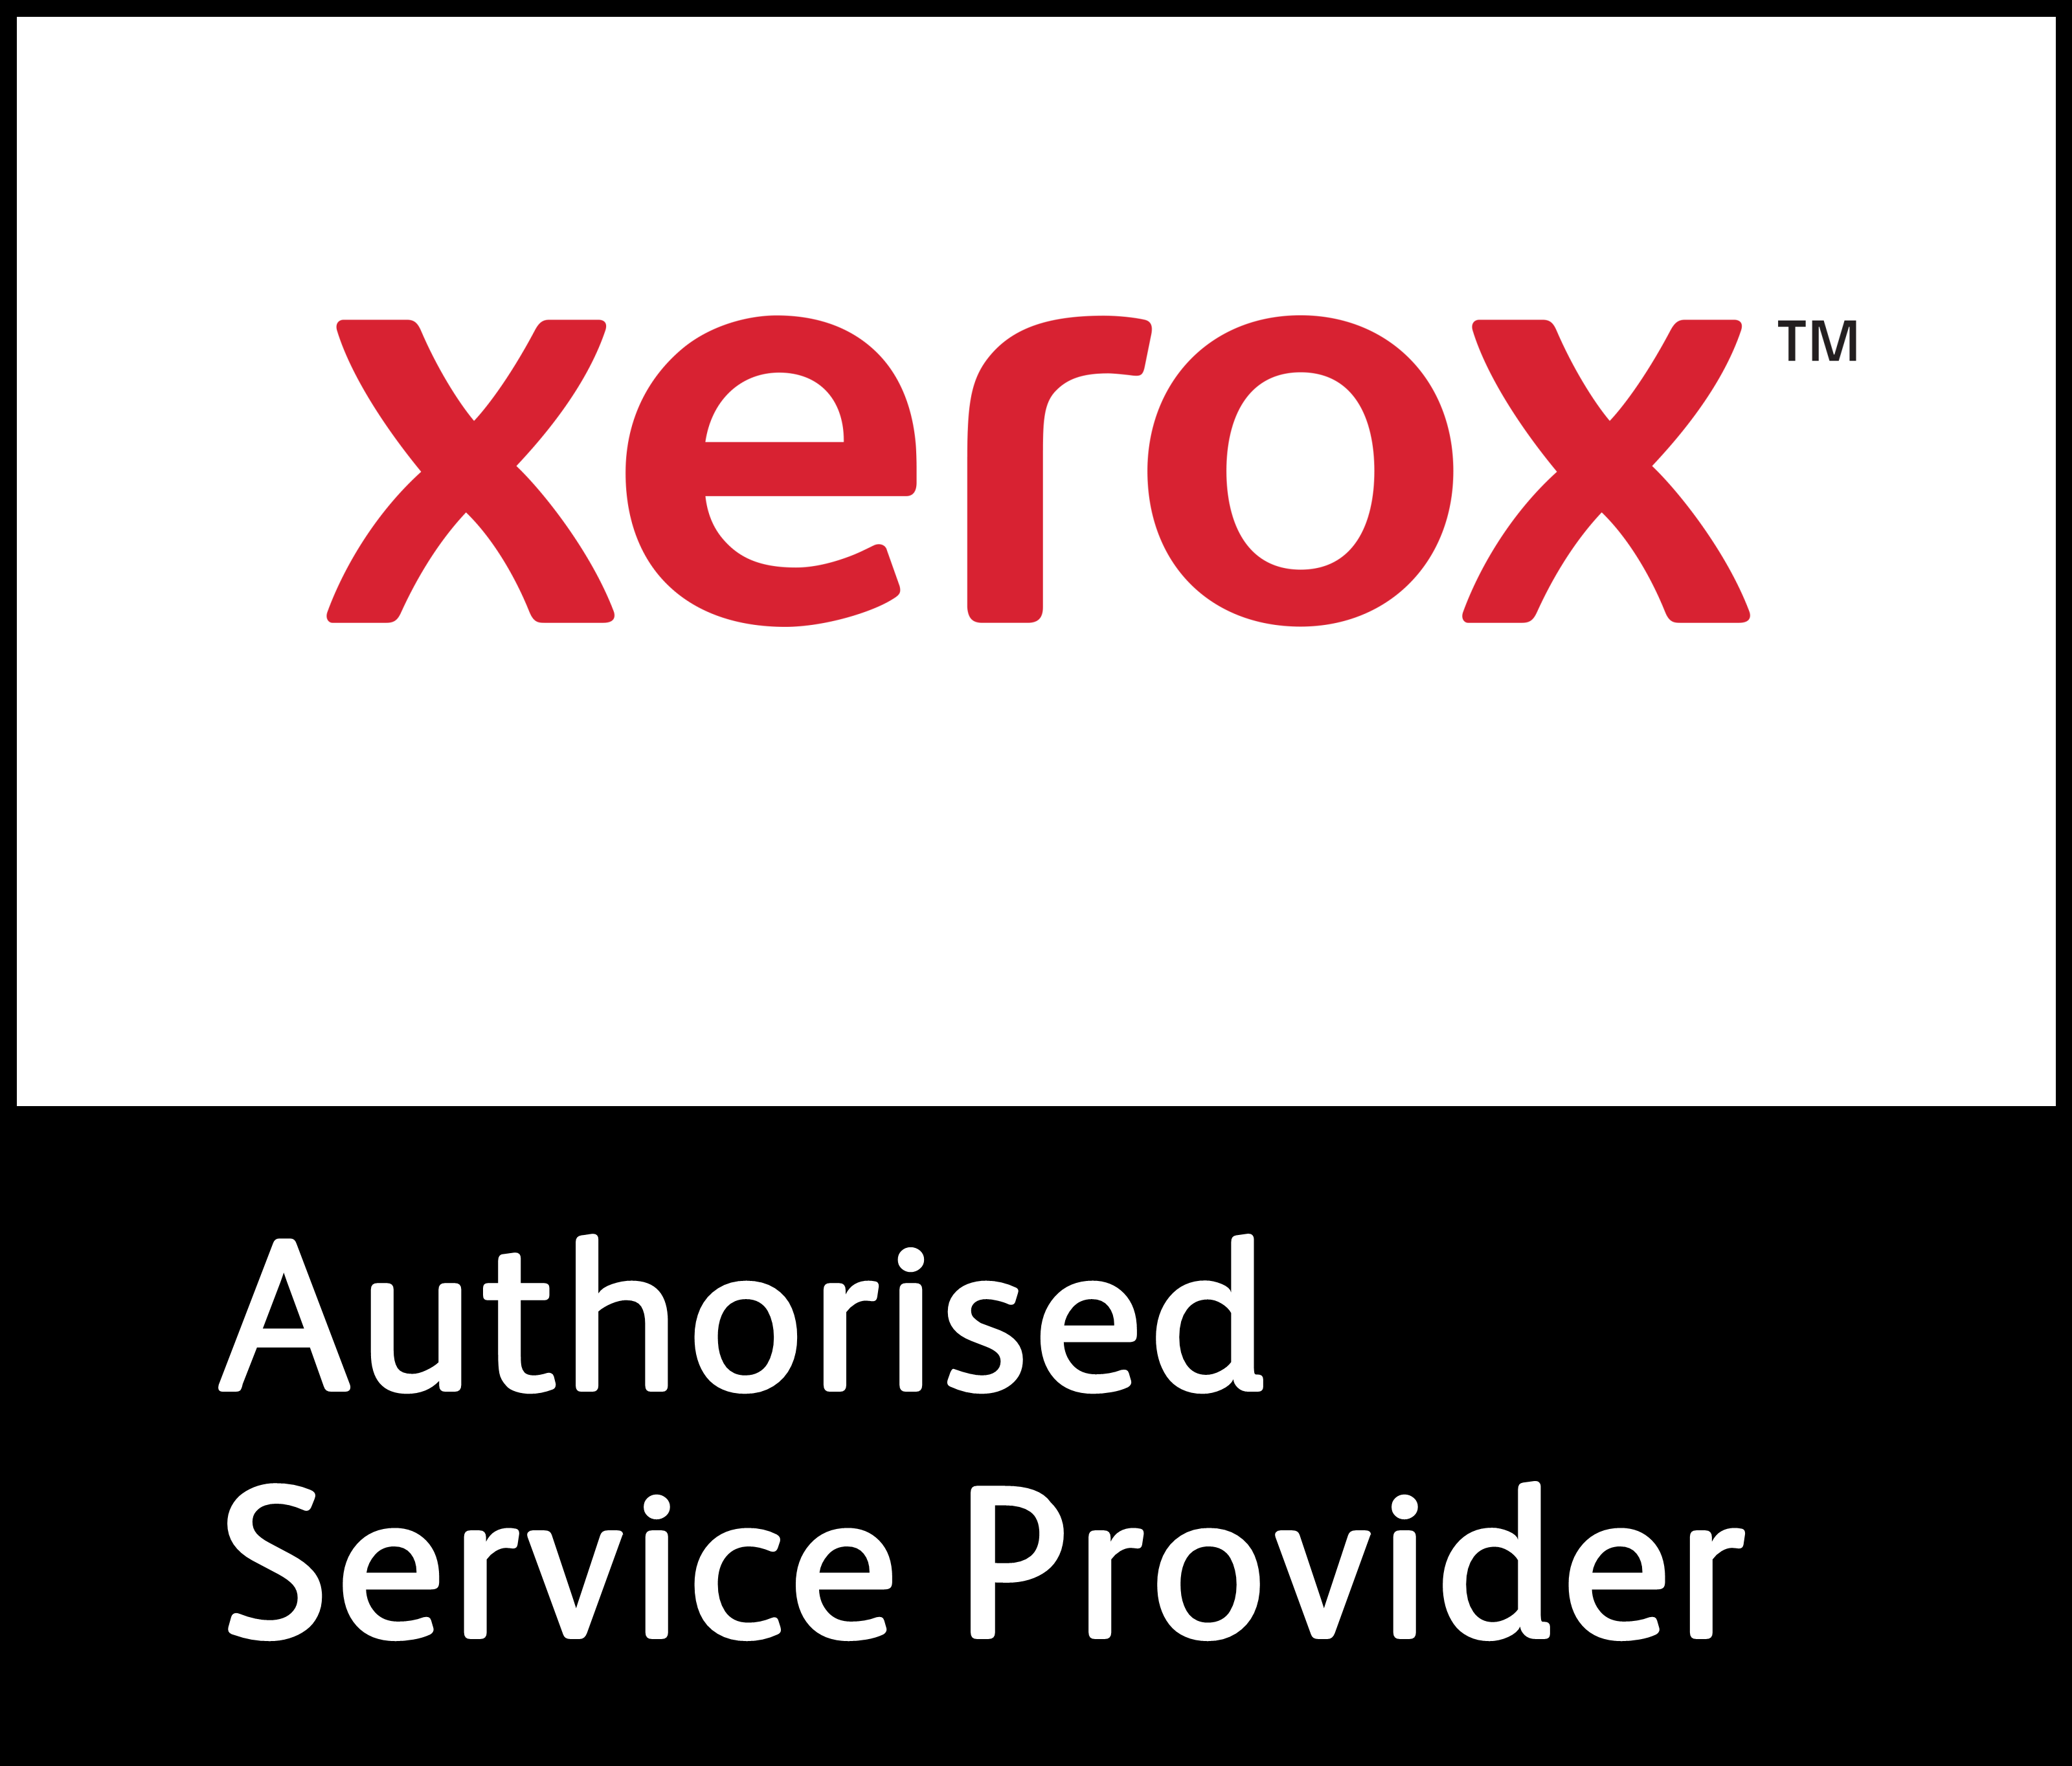 Xerox 